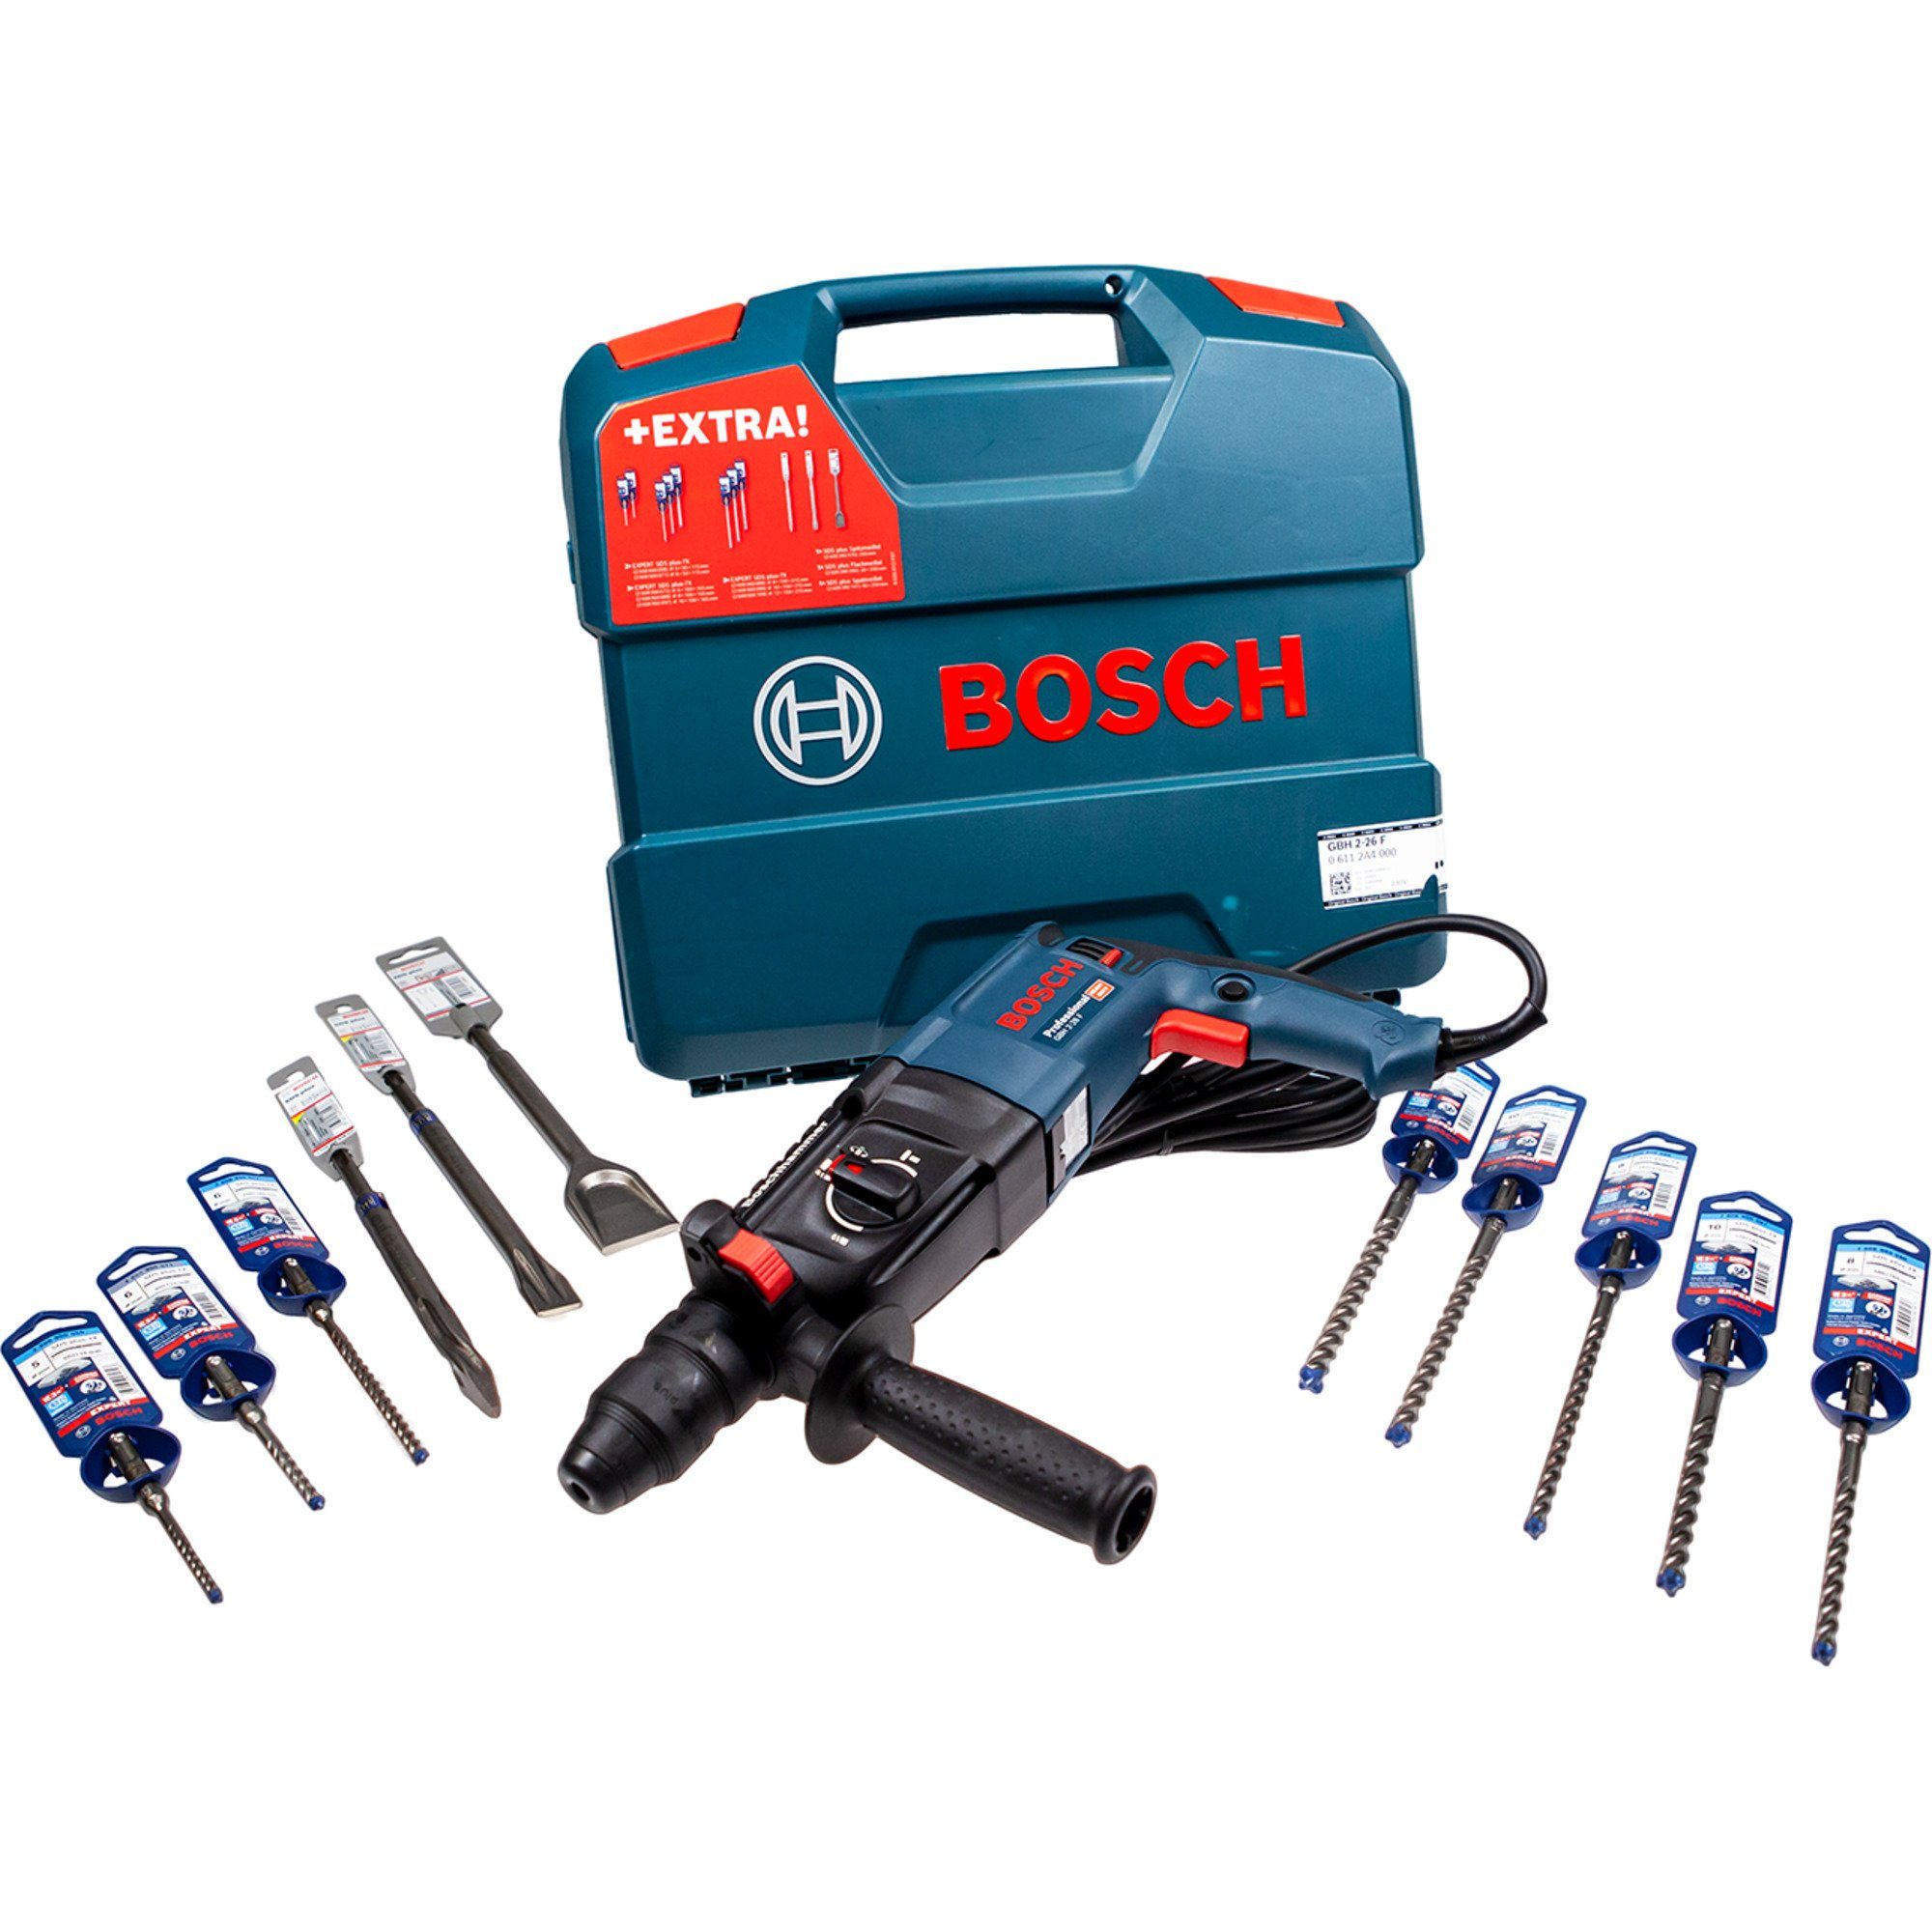 BOSCH Bohrhammer Bosch Bohrhammer Professional 2-26 GBH F